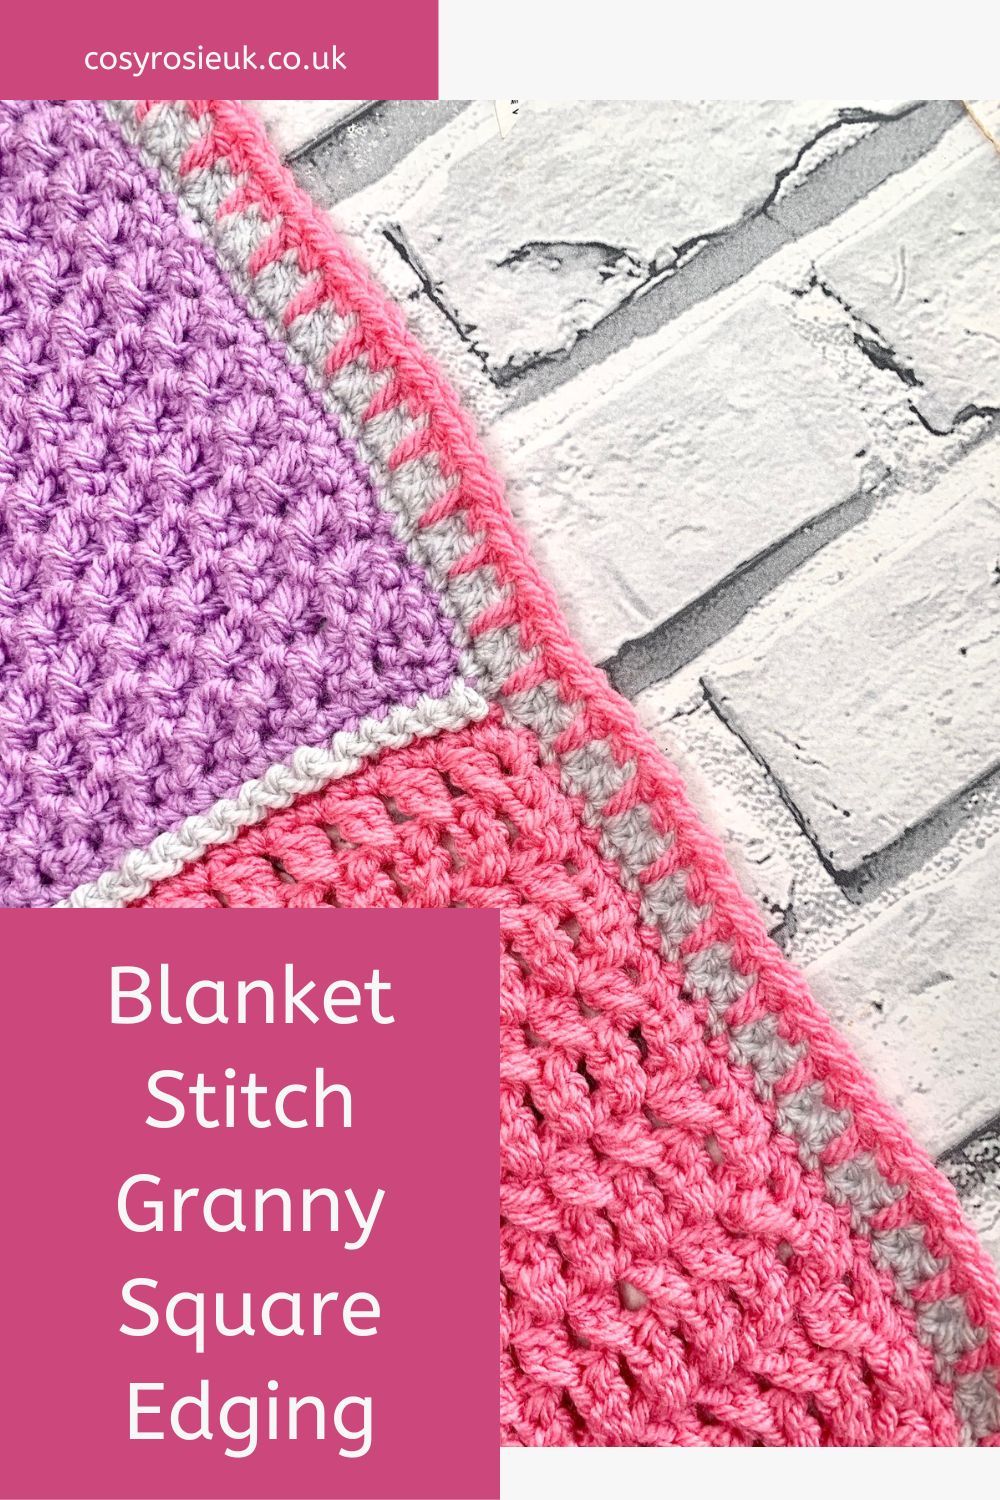 Blanket Stitch edging for granny squares